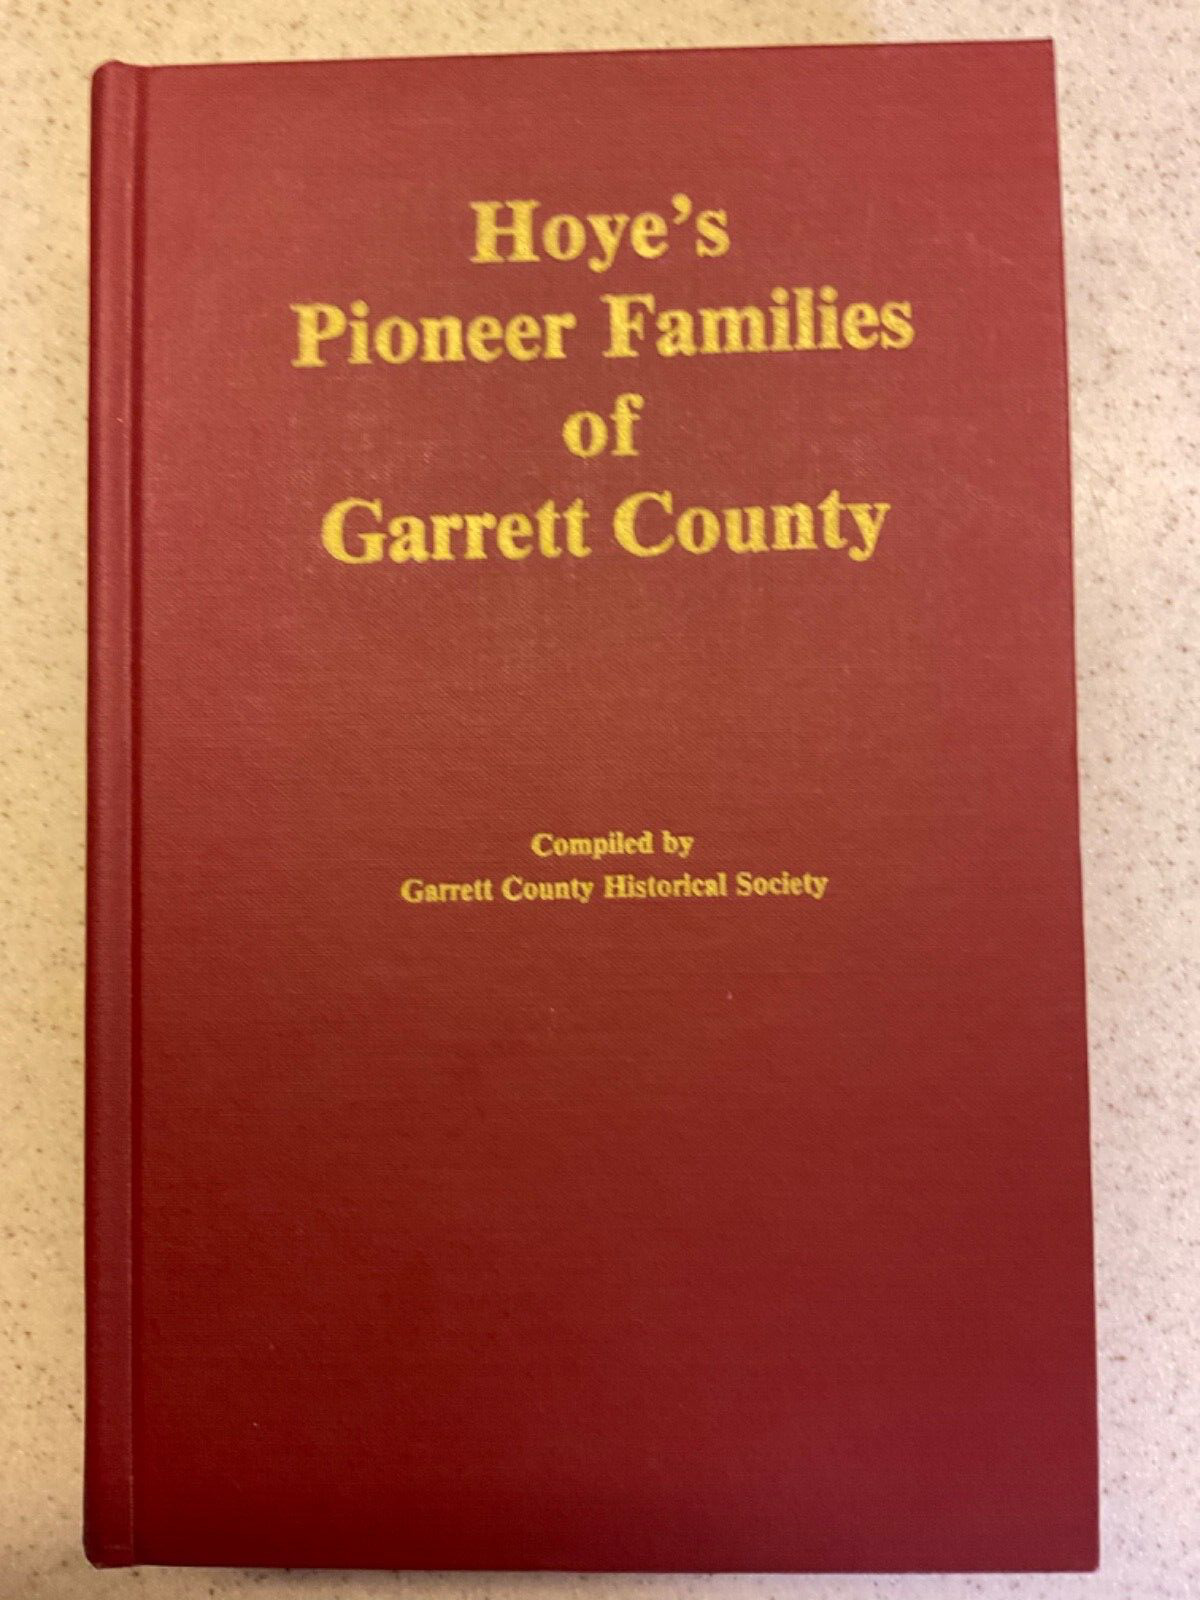 Hoye's Pioneer Families Of Garrett County Compiled By Garrett County Historical